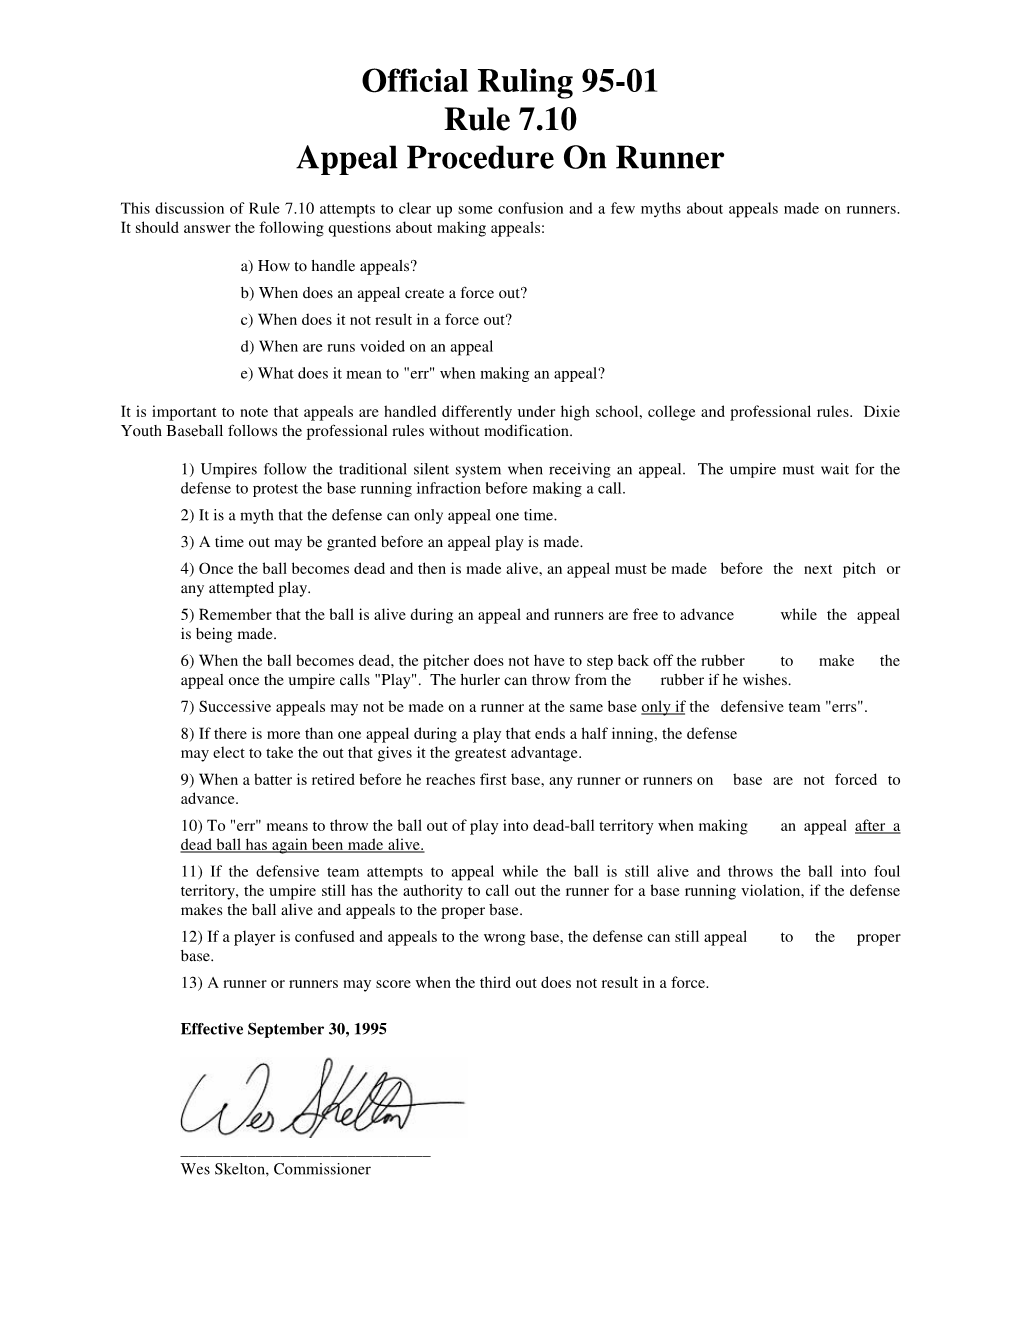 Official Ruling 95-01 Rule 7.10 Appeal Procedure on Runner